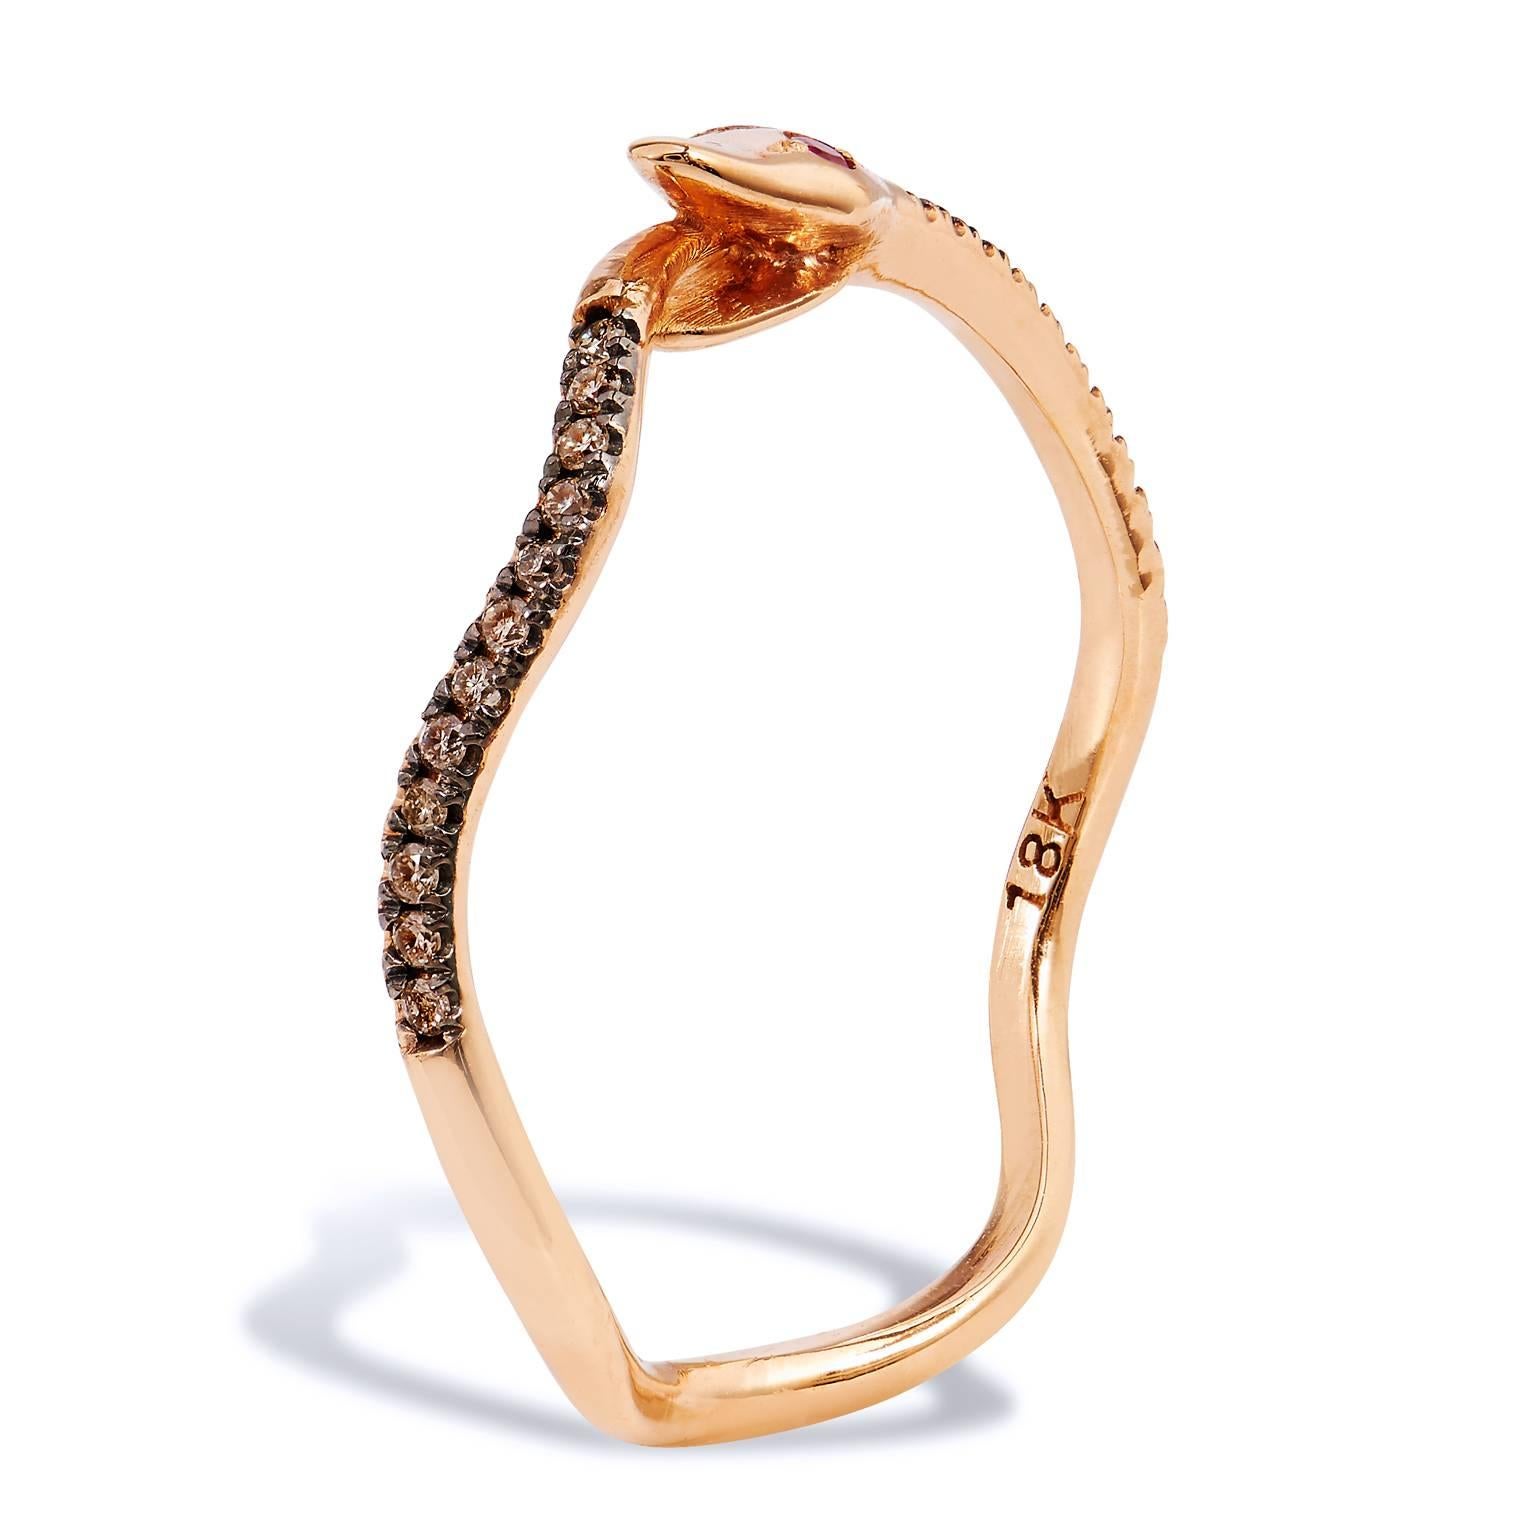 Suzanne Kalan 18 karat rose gold ring with snake band and 0.12 carat of champagne diamonds pave set (Size: 7).